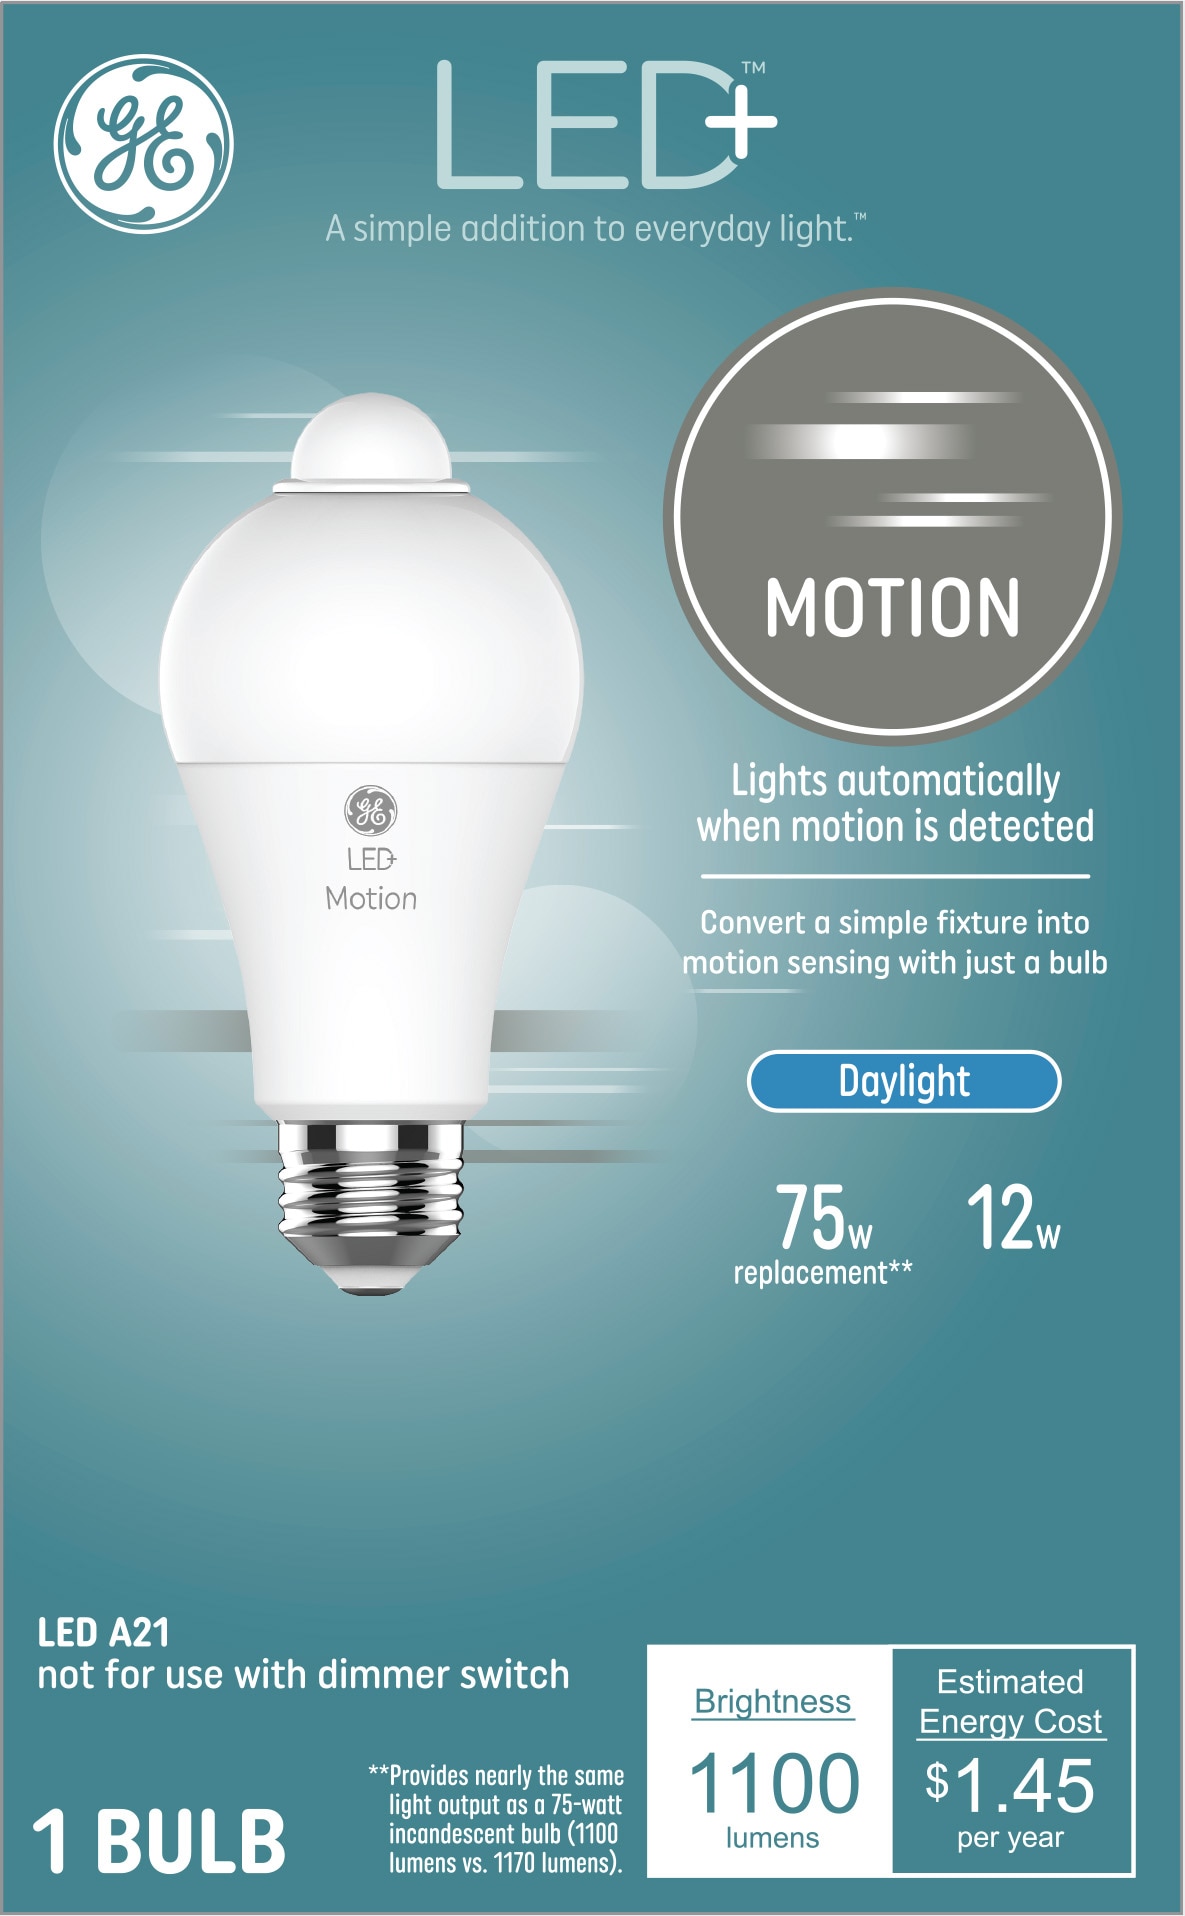 LED+ Dusk to Dawn General Purpose Light Bulbs at